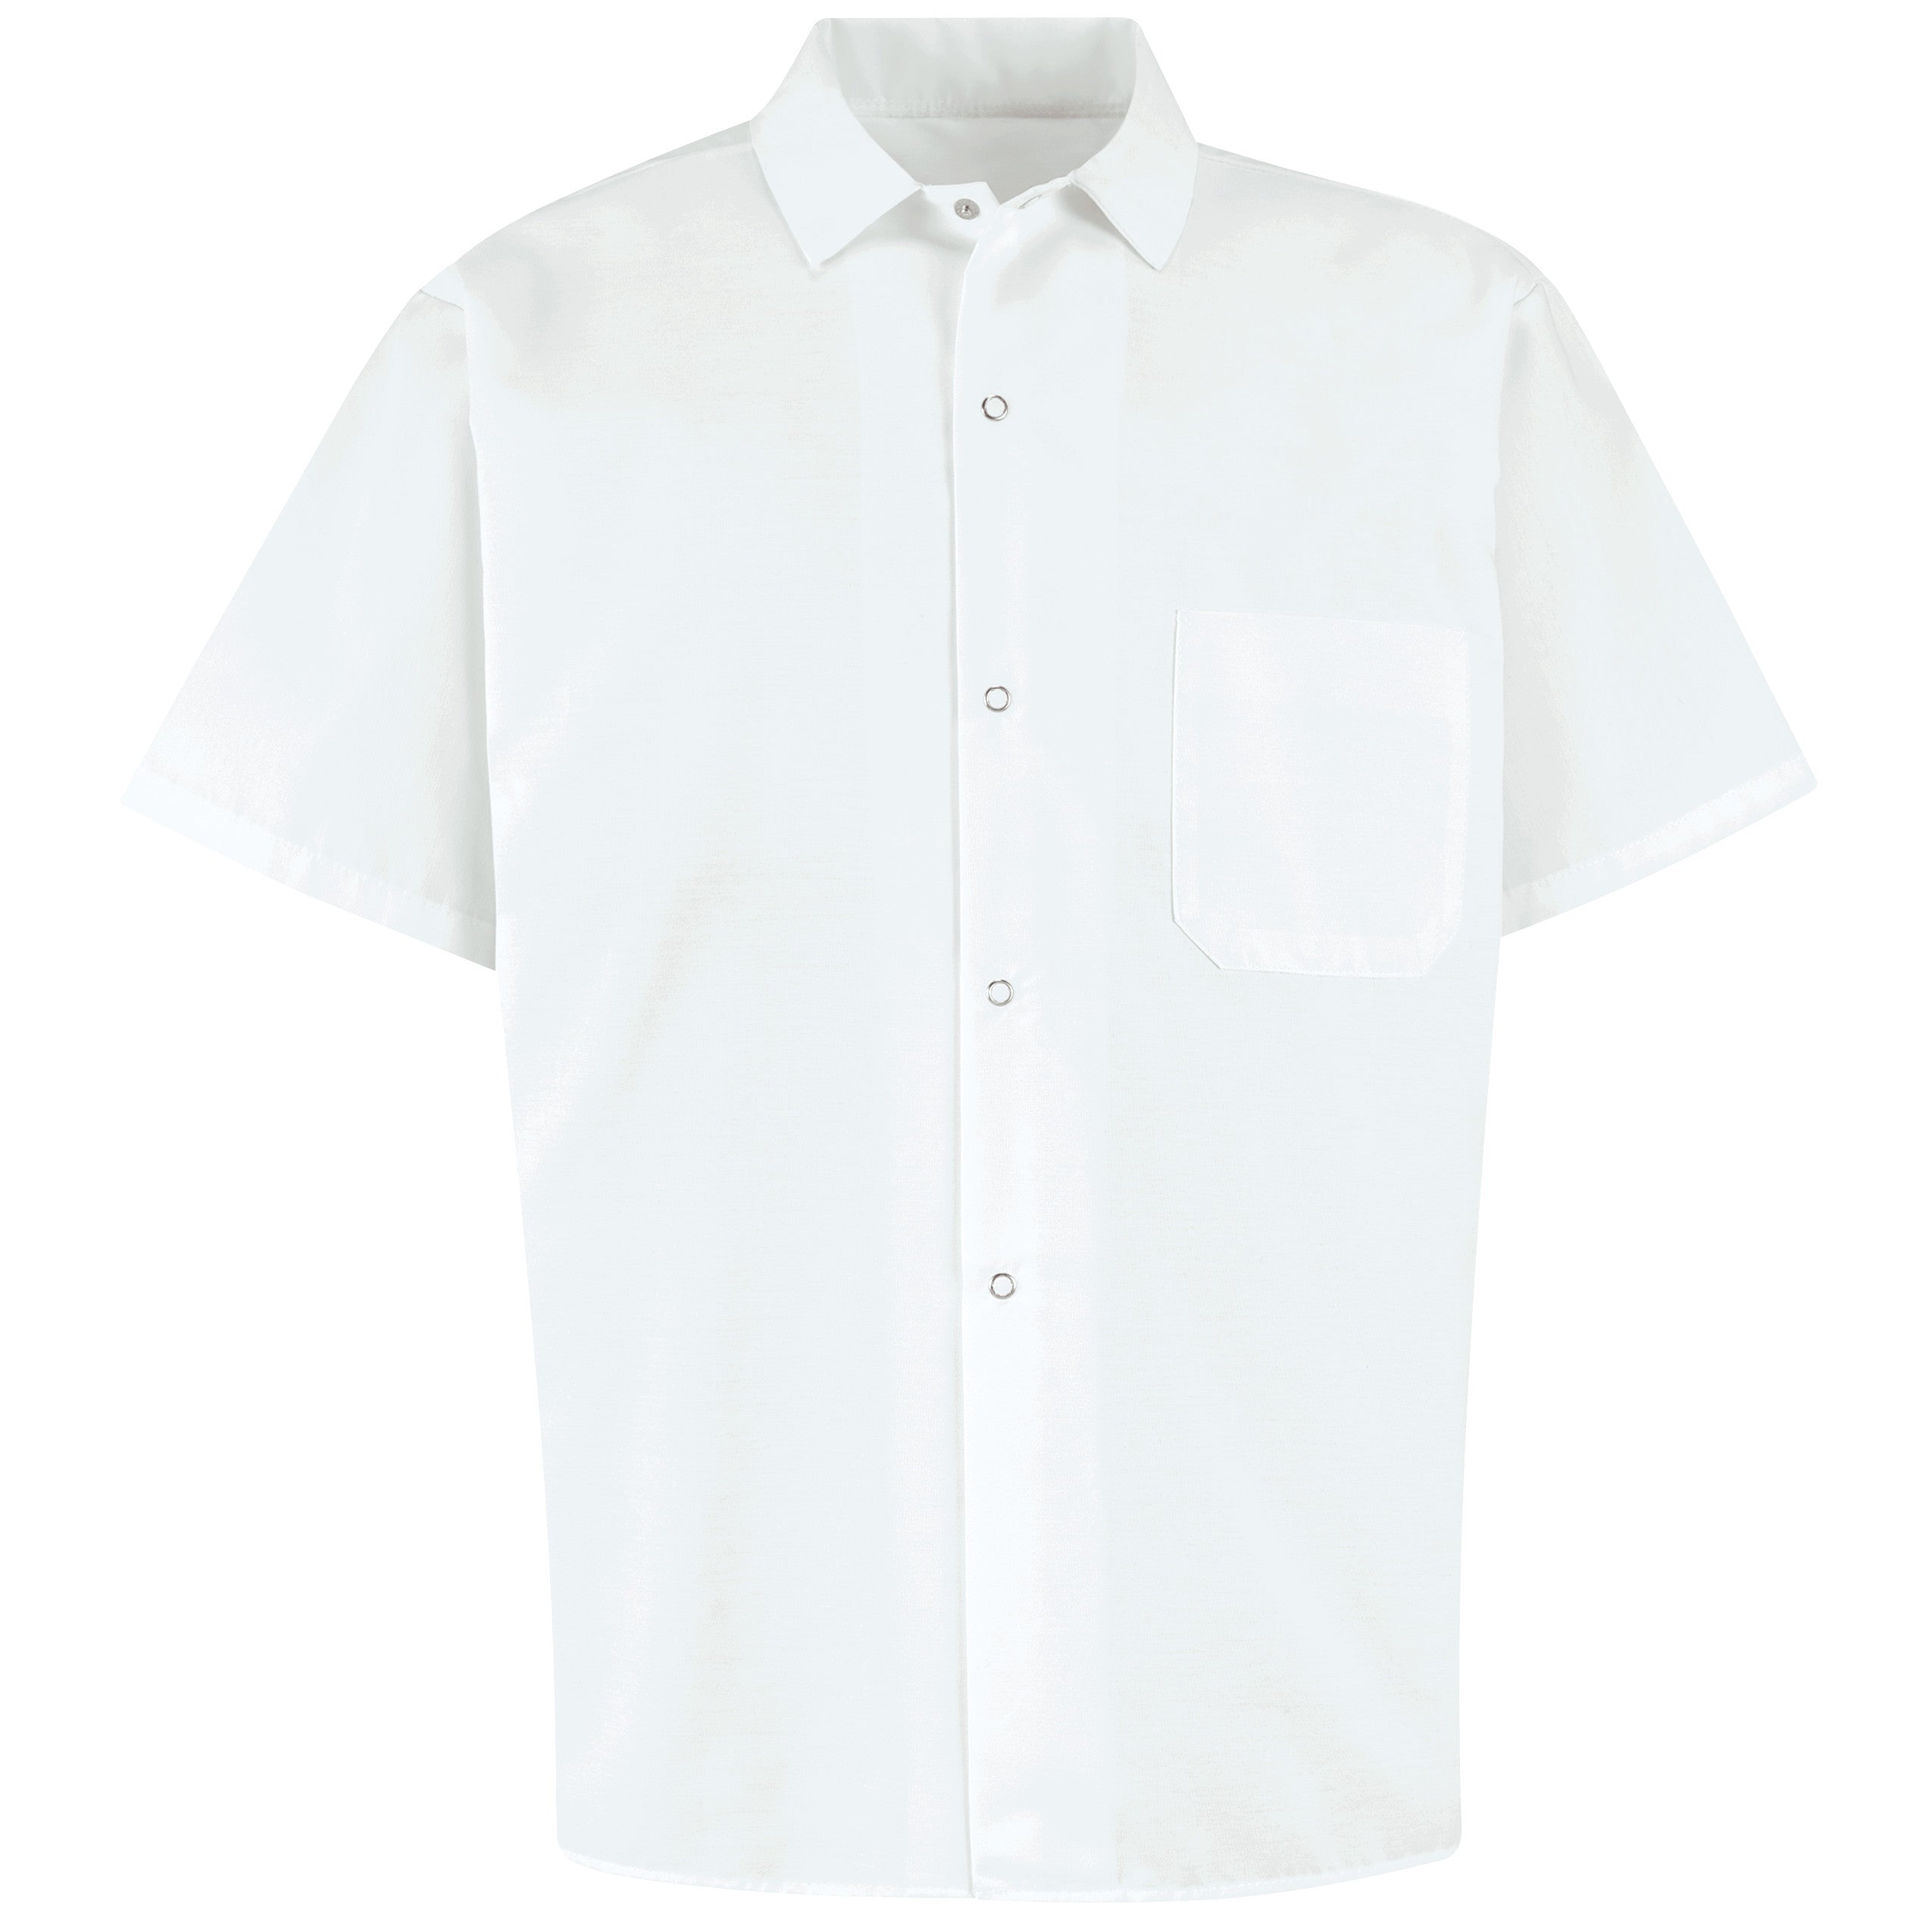 Men's Cook Shirt 5020 - White-eSafety Supplies, Inc